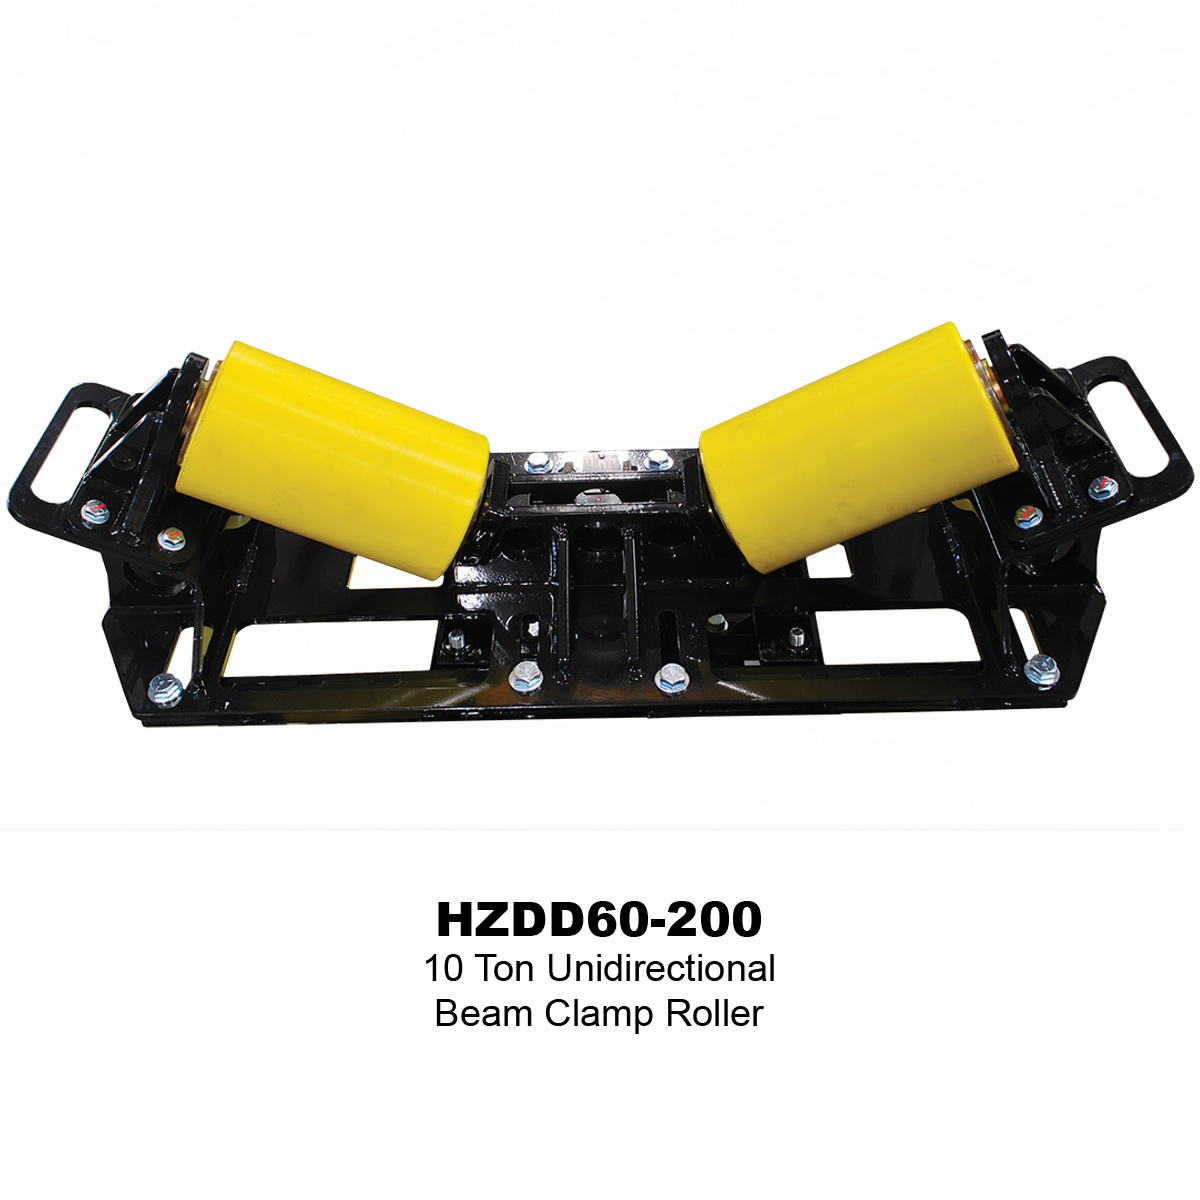 01-HERO-HZDD60-200-1200sq